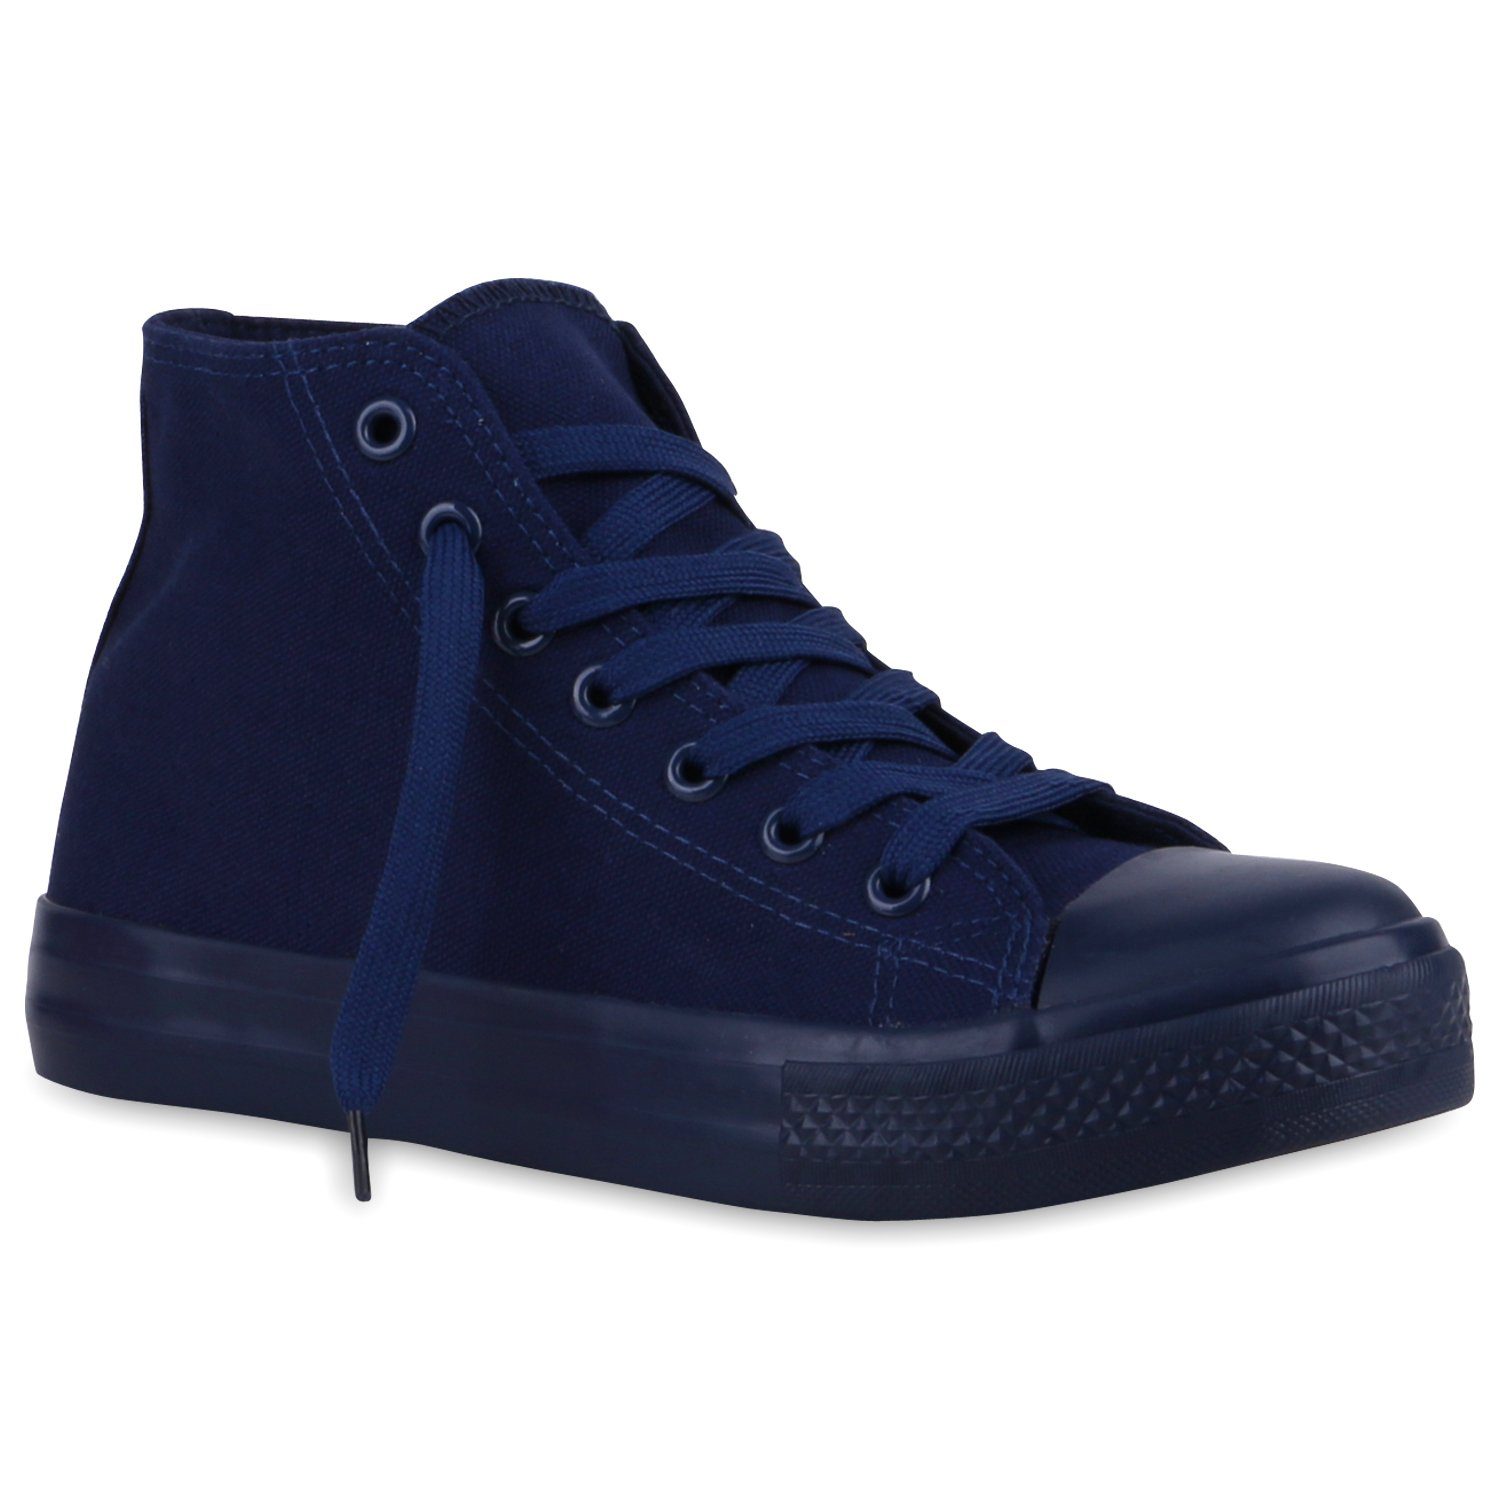 VAN HILL 811070 Sneaker Schuhe online kaufen | OTTO